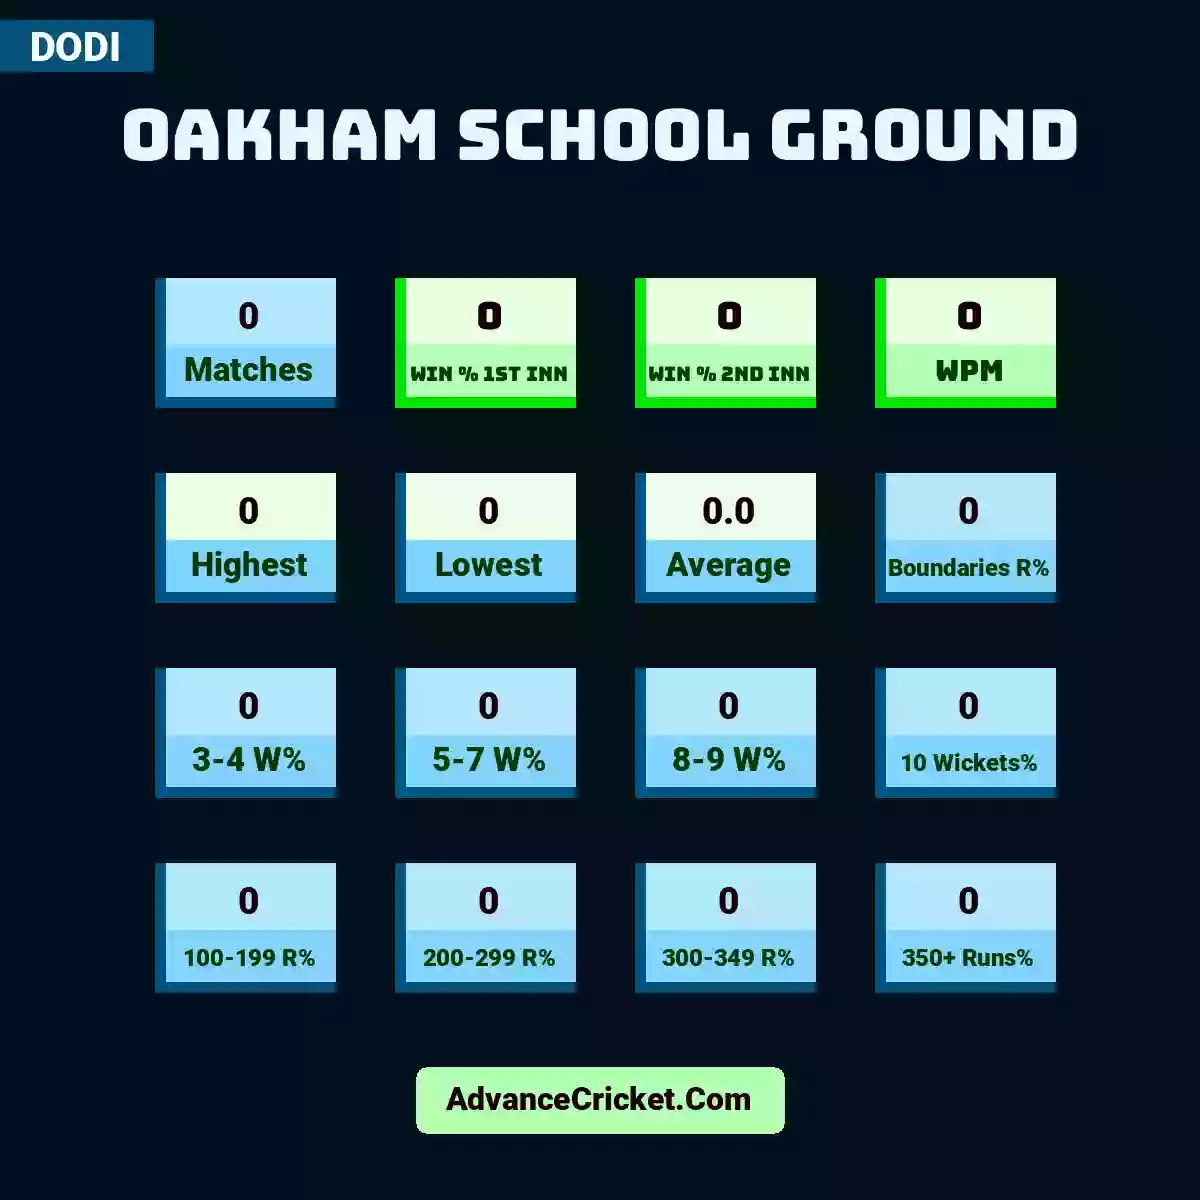 Image showing Oakham School Ground with Matches: 0, Win % 1st Inn: 0, Win % 2nd Inn: 0, WPM: 0, Highest: 0, Lowest: 0, Average: 0.0, Boundaries R%: 0, 3-4 W%: 0, 5-7 W%: 0, 8-9 W%: 0, 10 Wickets%: 0, 100-199 R%: 0, 200-299 R%: 0, 300-349 R%: 0, 350+ Runs%: 0.